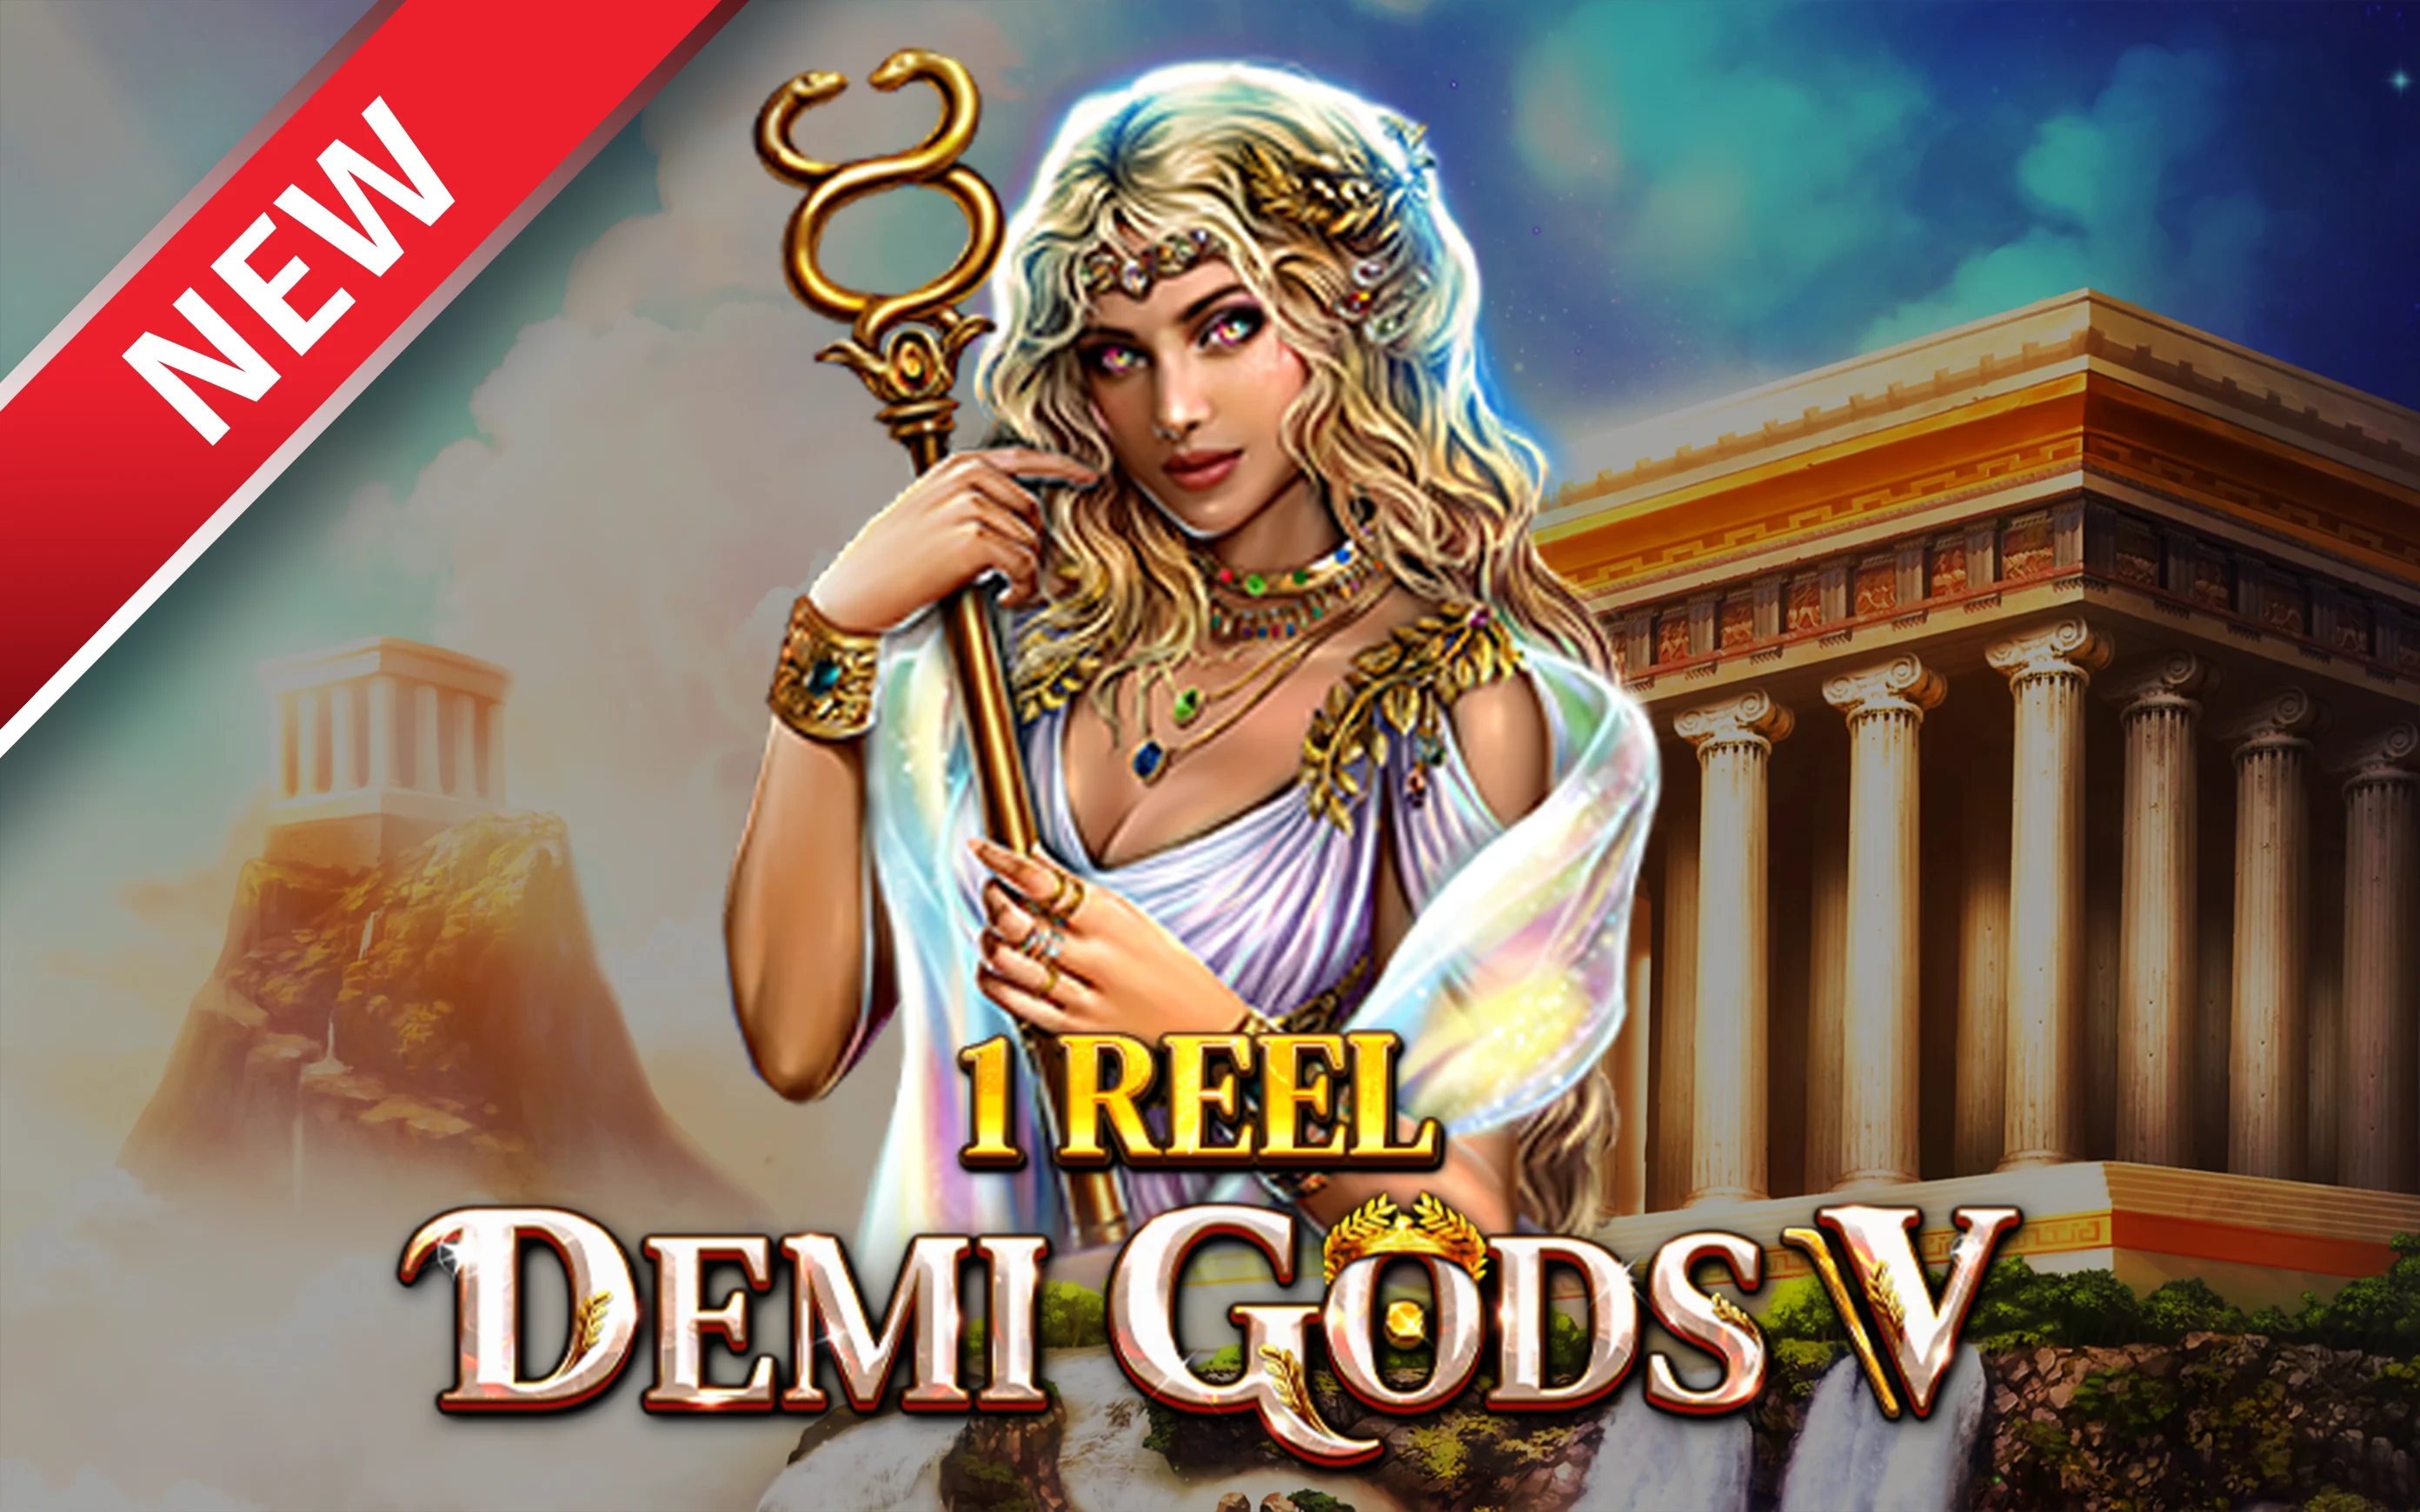 Joacă 1 Reel – Demi Gods V în cazinoul online Starcasino.be